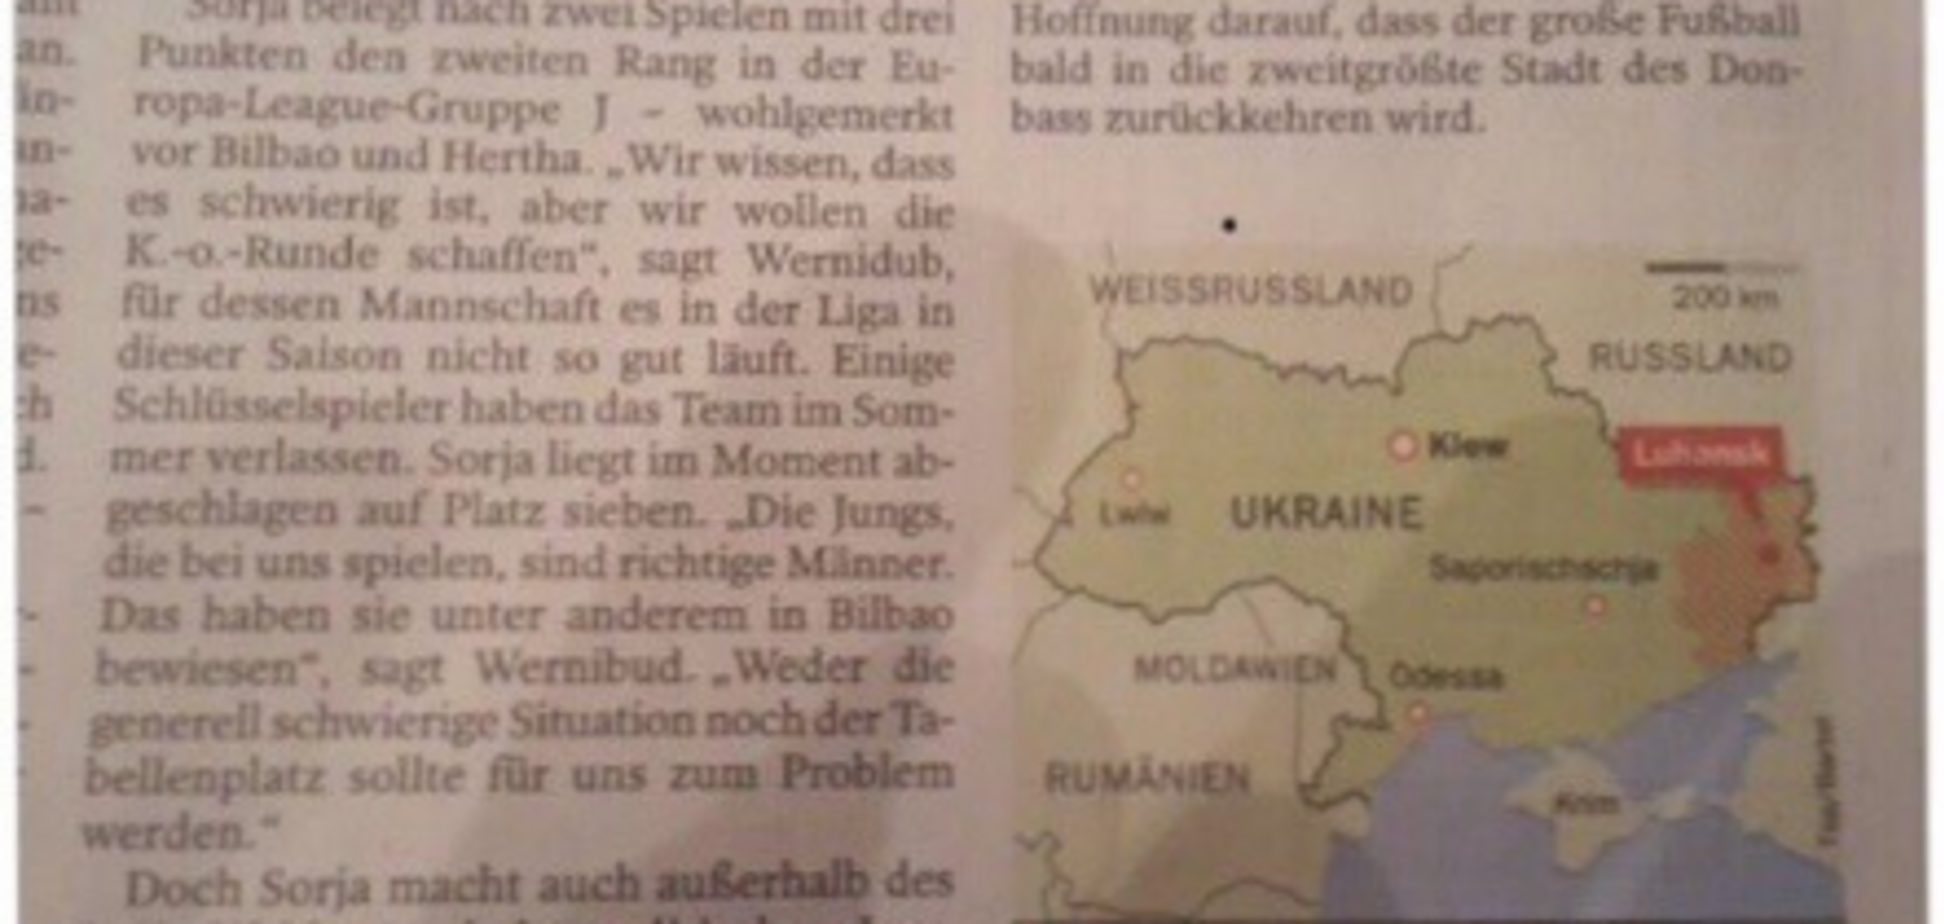 Німецька газета Der Tagesspiegel